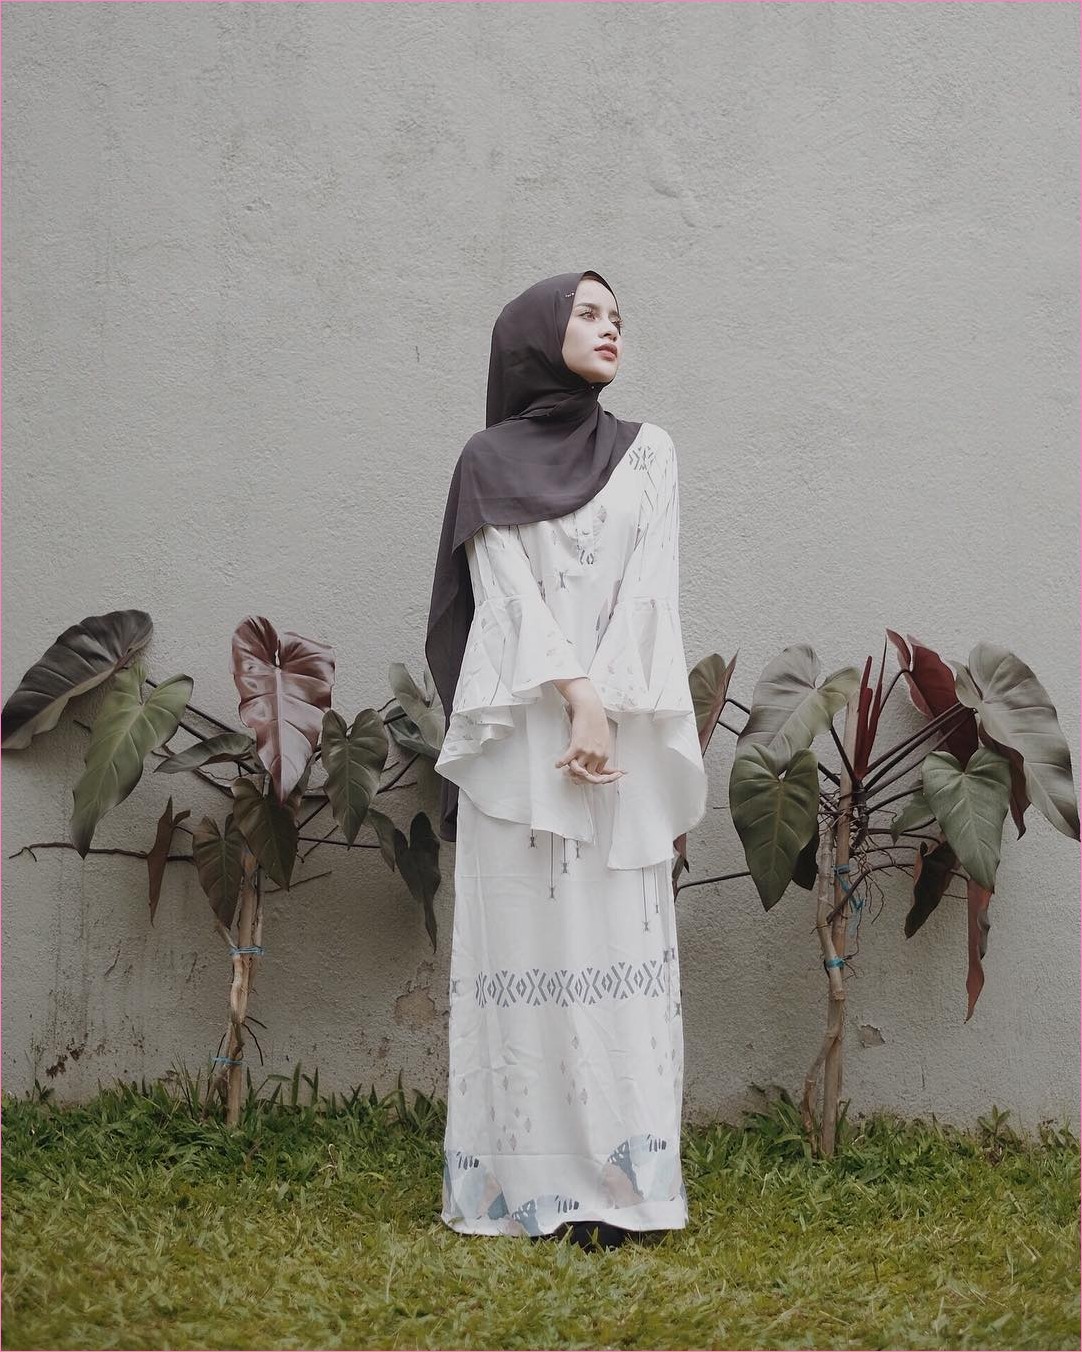  Model Outfit Baju Hijab Casual Untuk Perempuan Gemuk Ala Selebgram  Model Outfit Baju Hijab Casual Untuk Perempuan Gemuk Ala Selebgram 2018